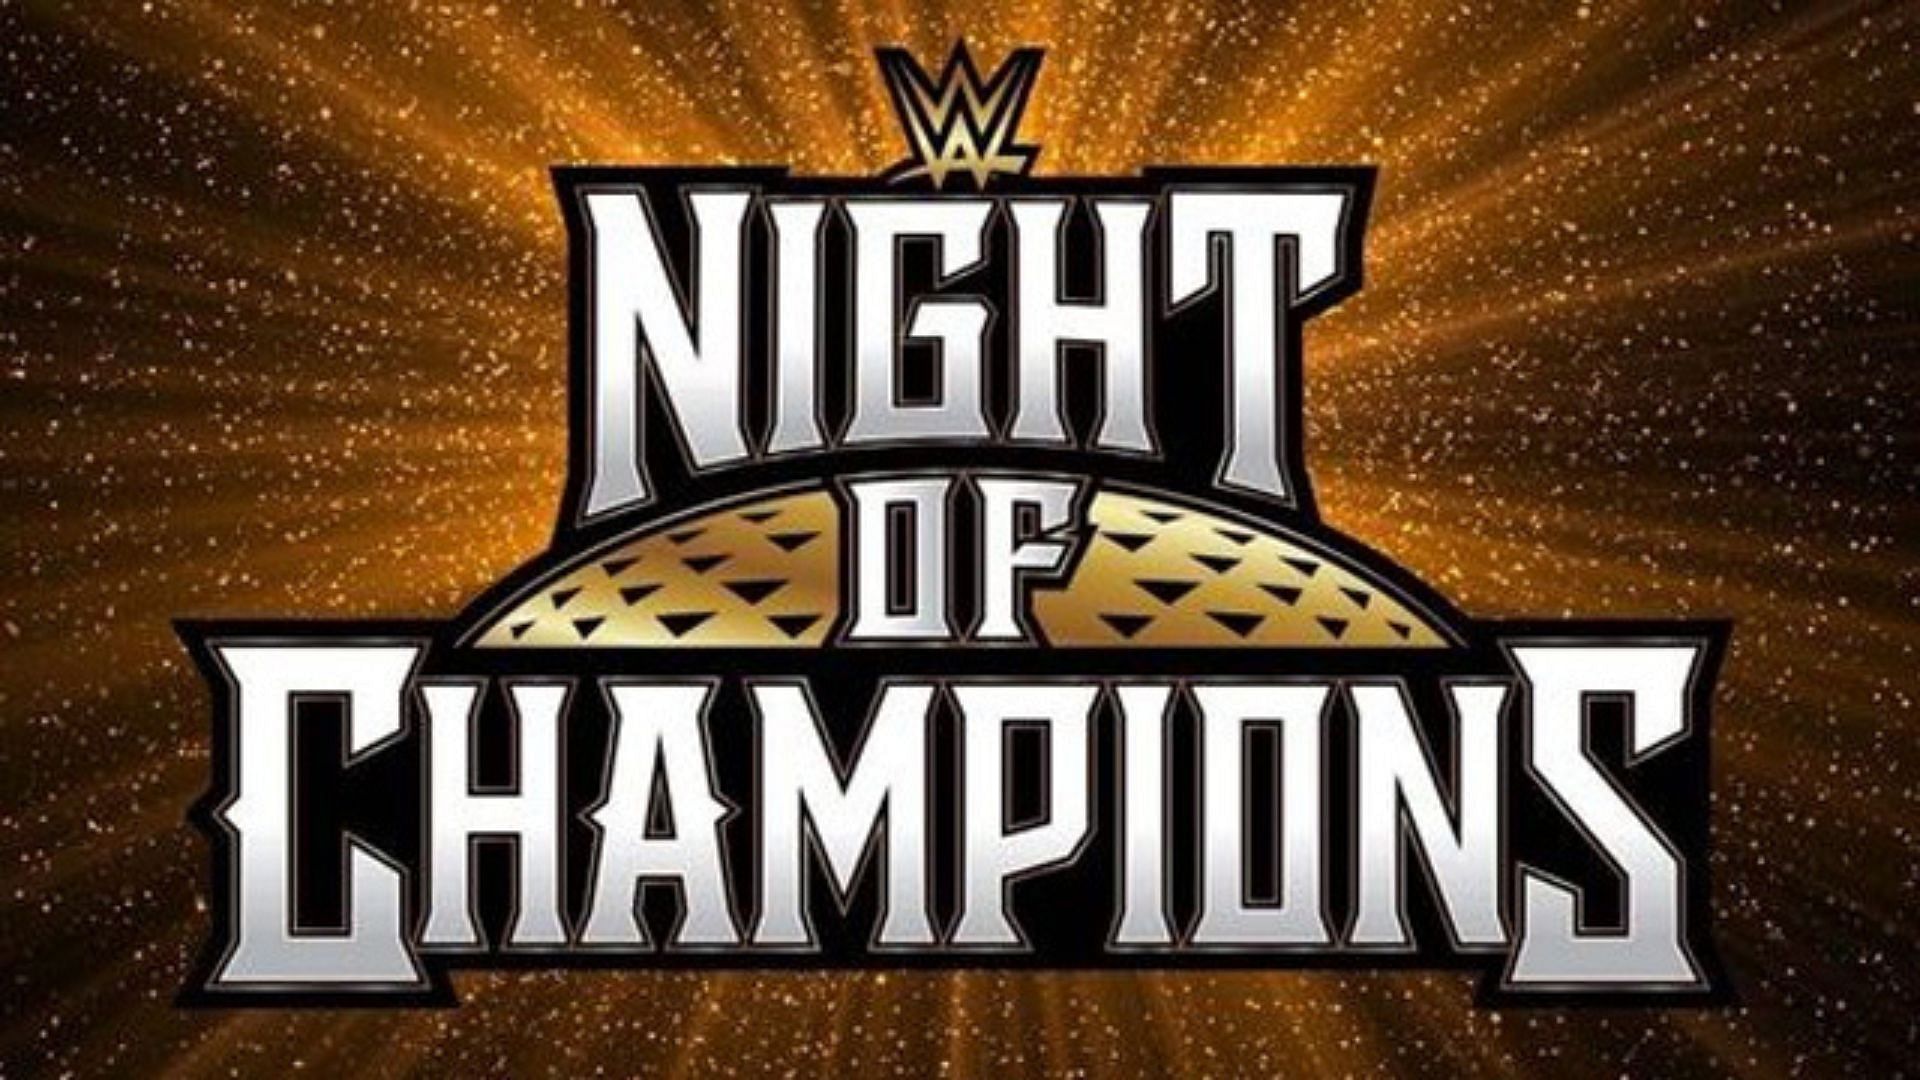 WWE Night of Champions 2023 will take place at Saudi Arabia in May 27